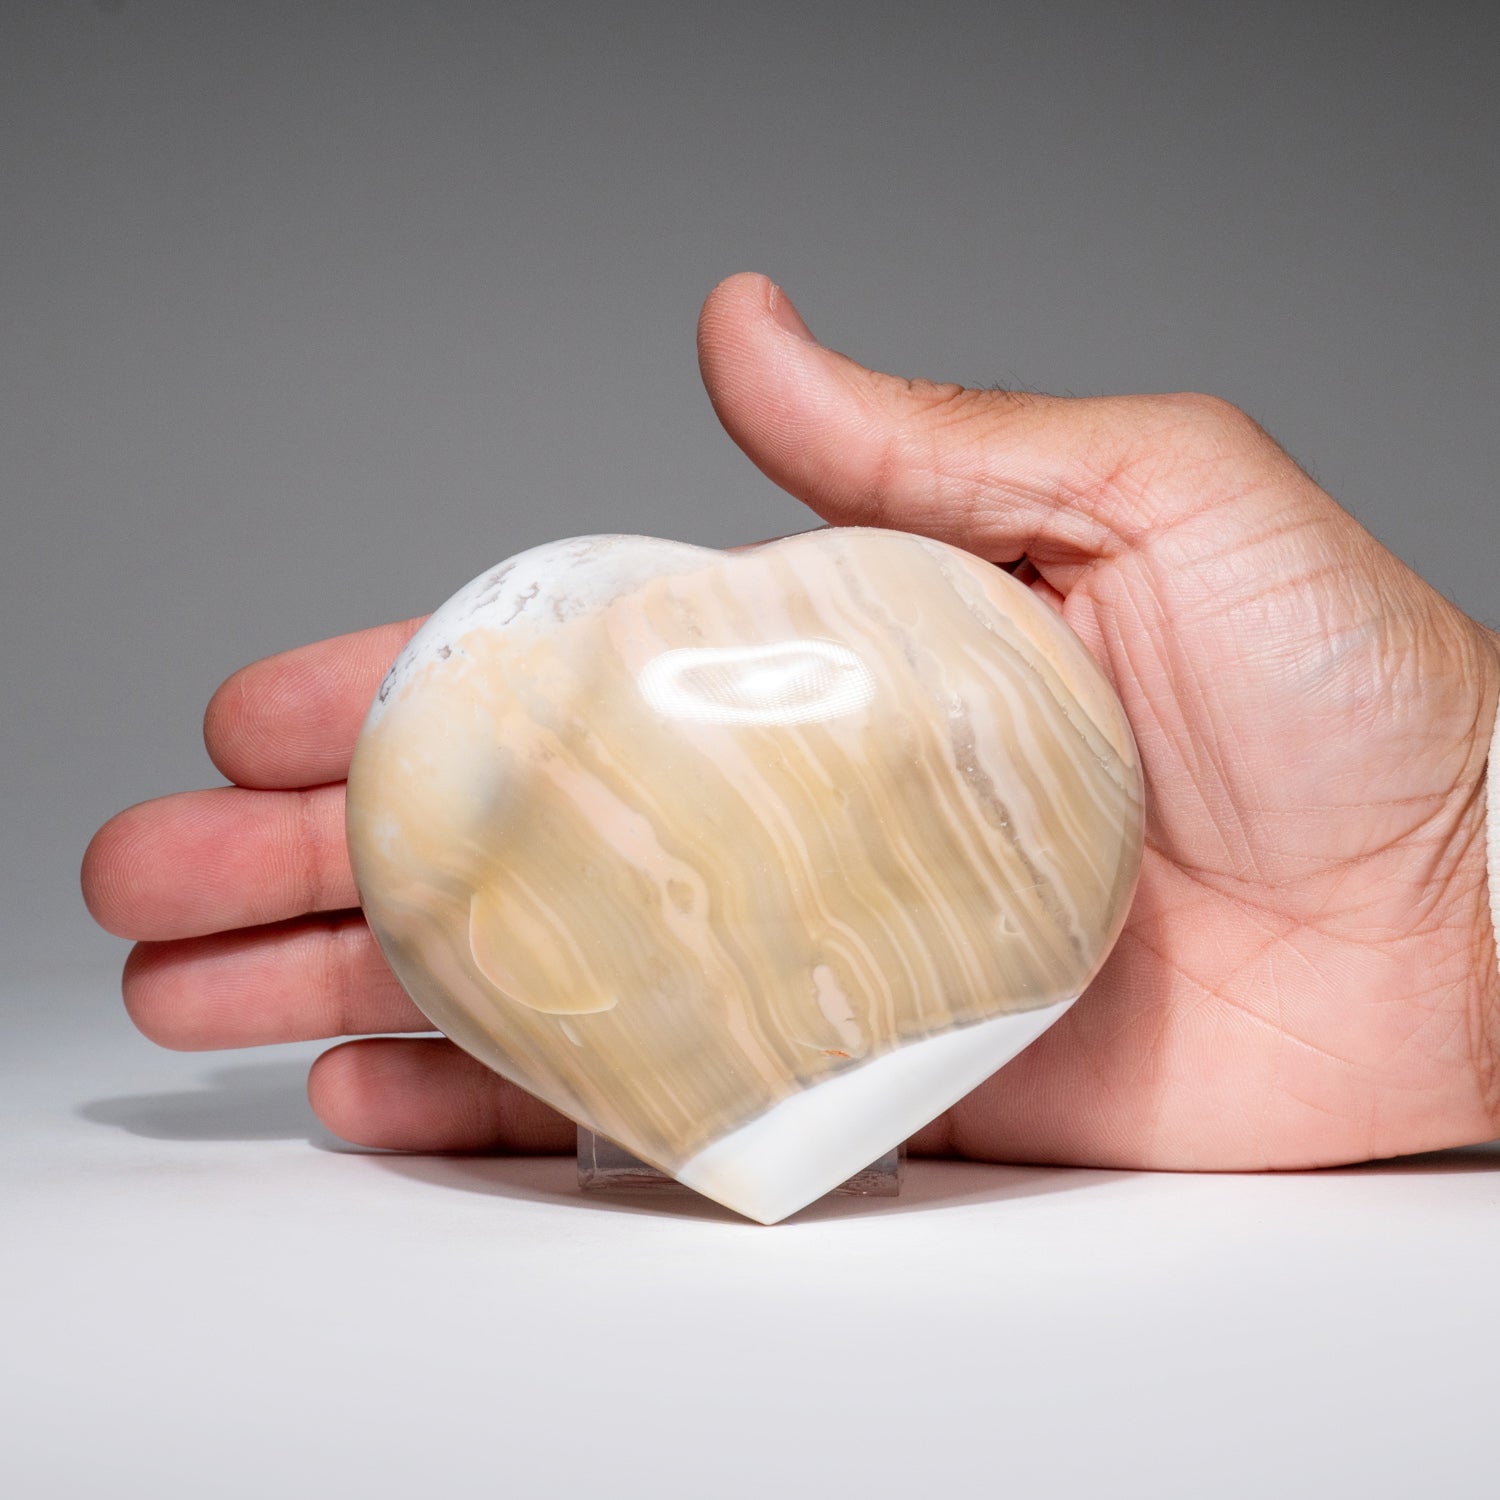 Genuine Polished Polychrome Jasper Heart from Madagascar (460 grams)